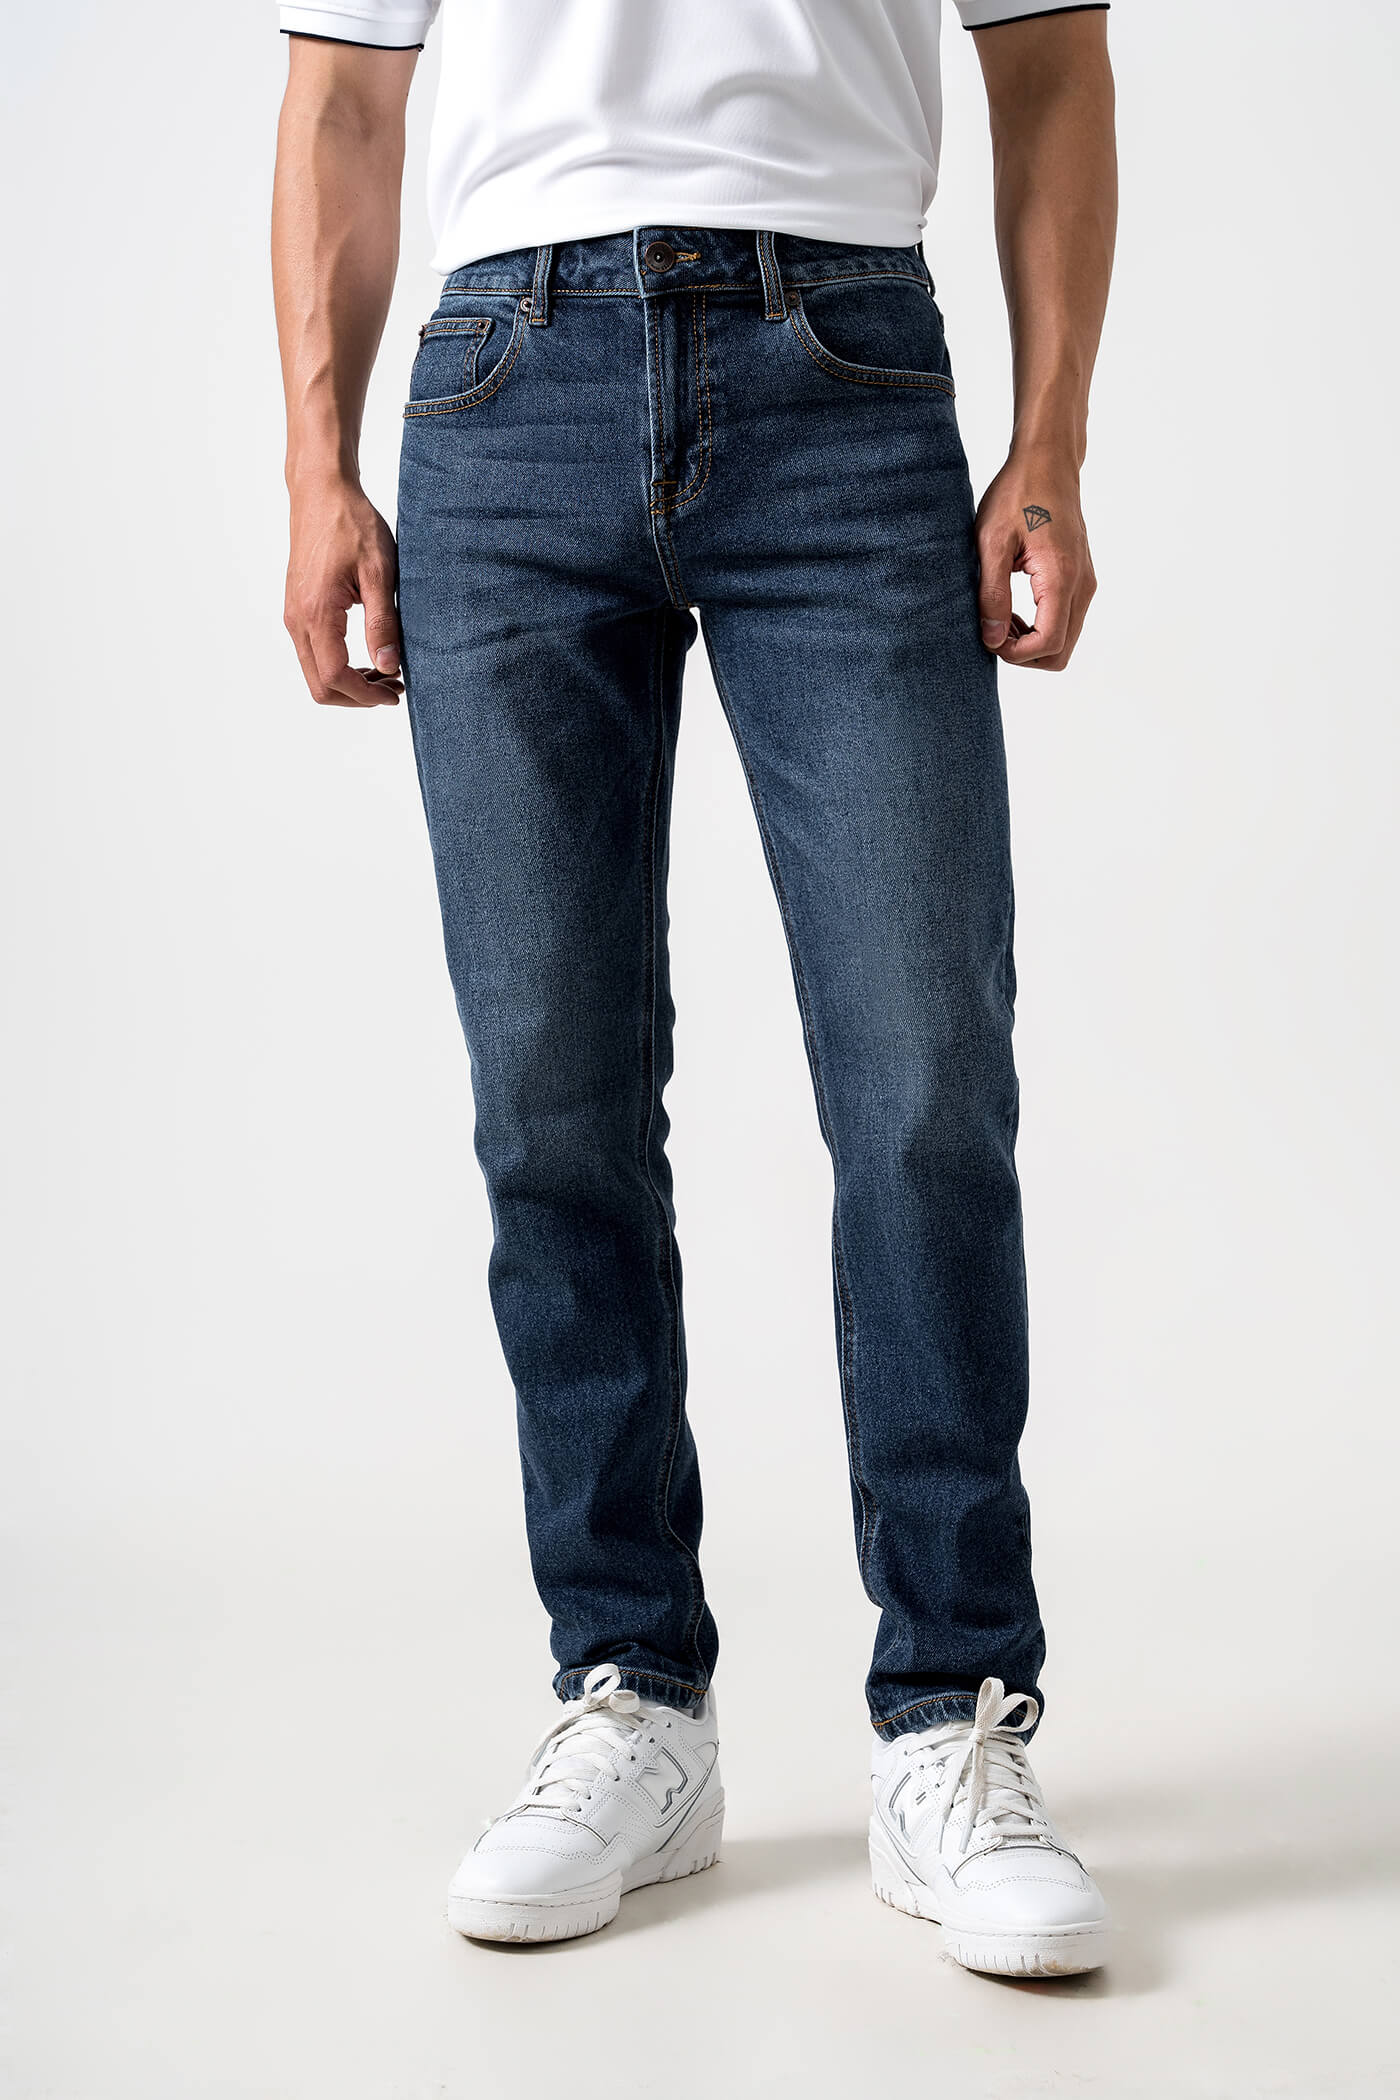 Jeans Copper Denim Slim Fit xanh-dam 3